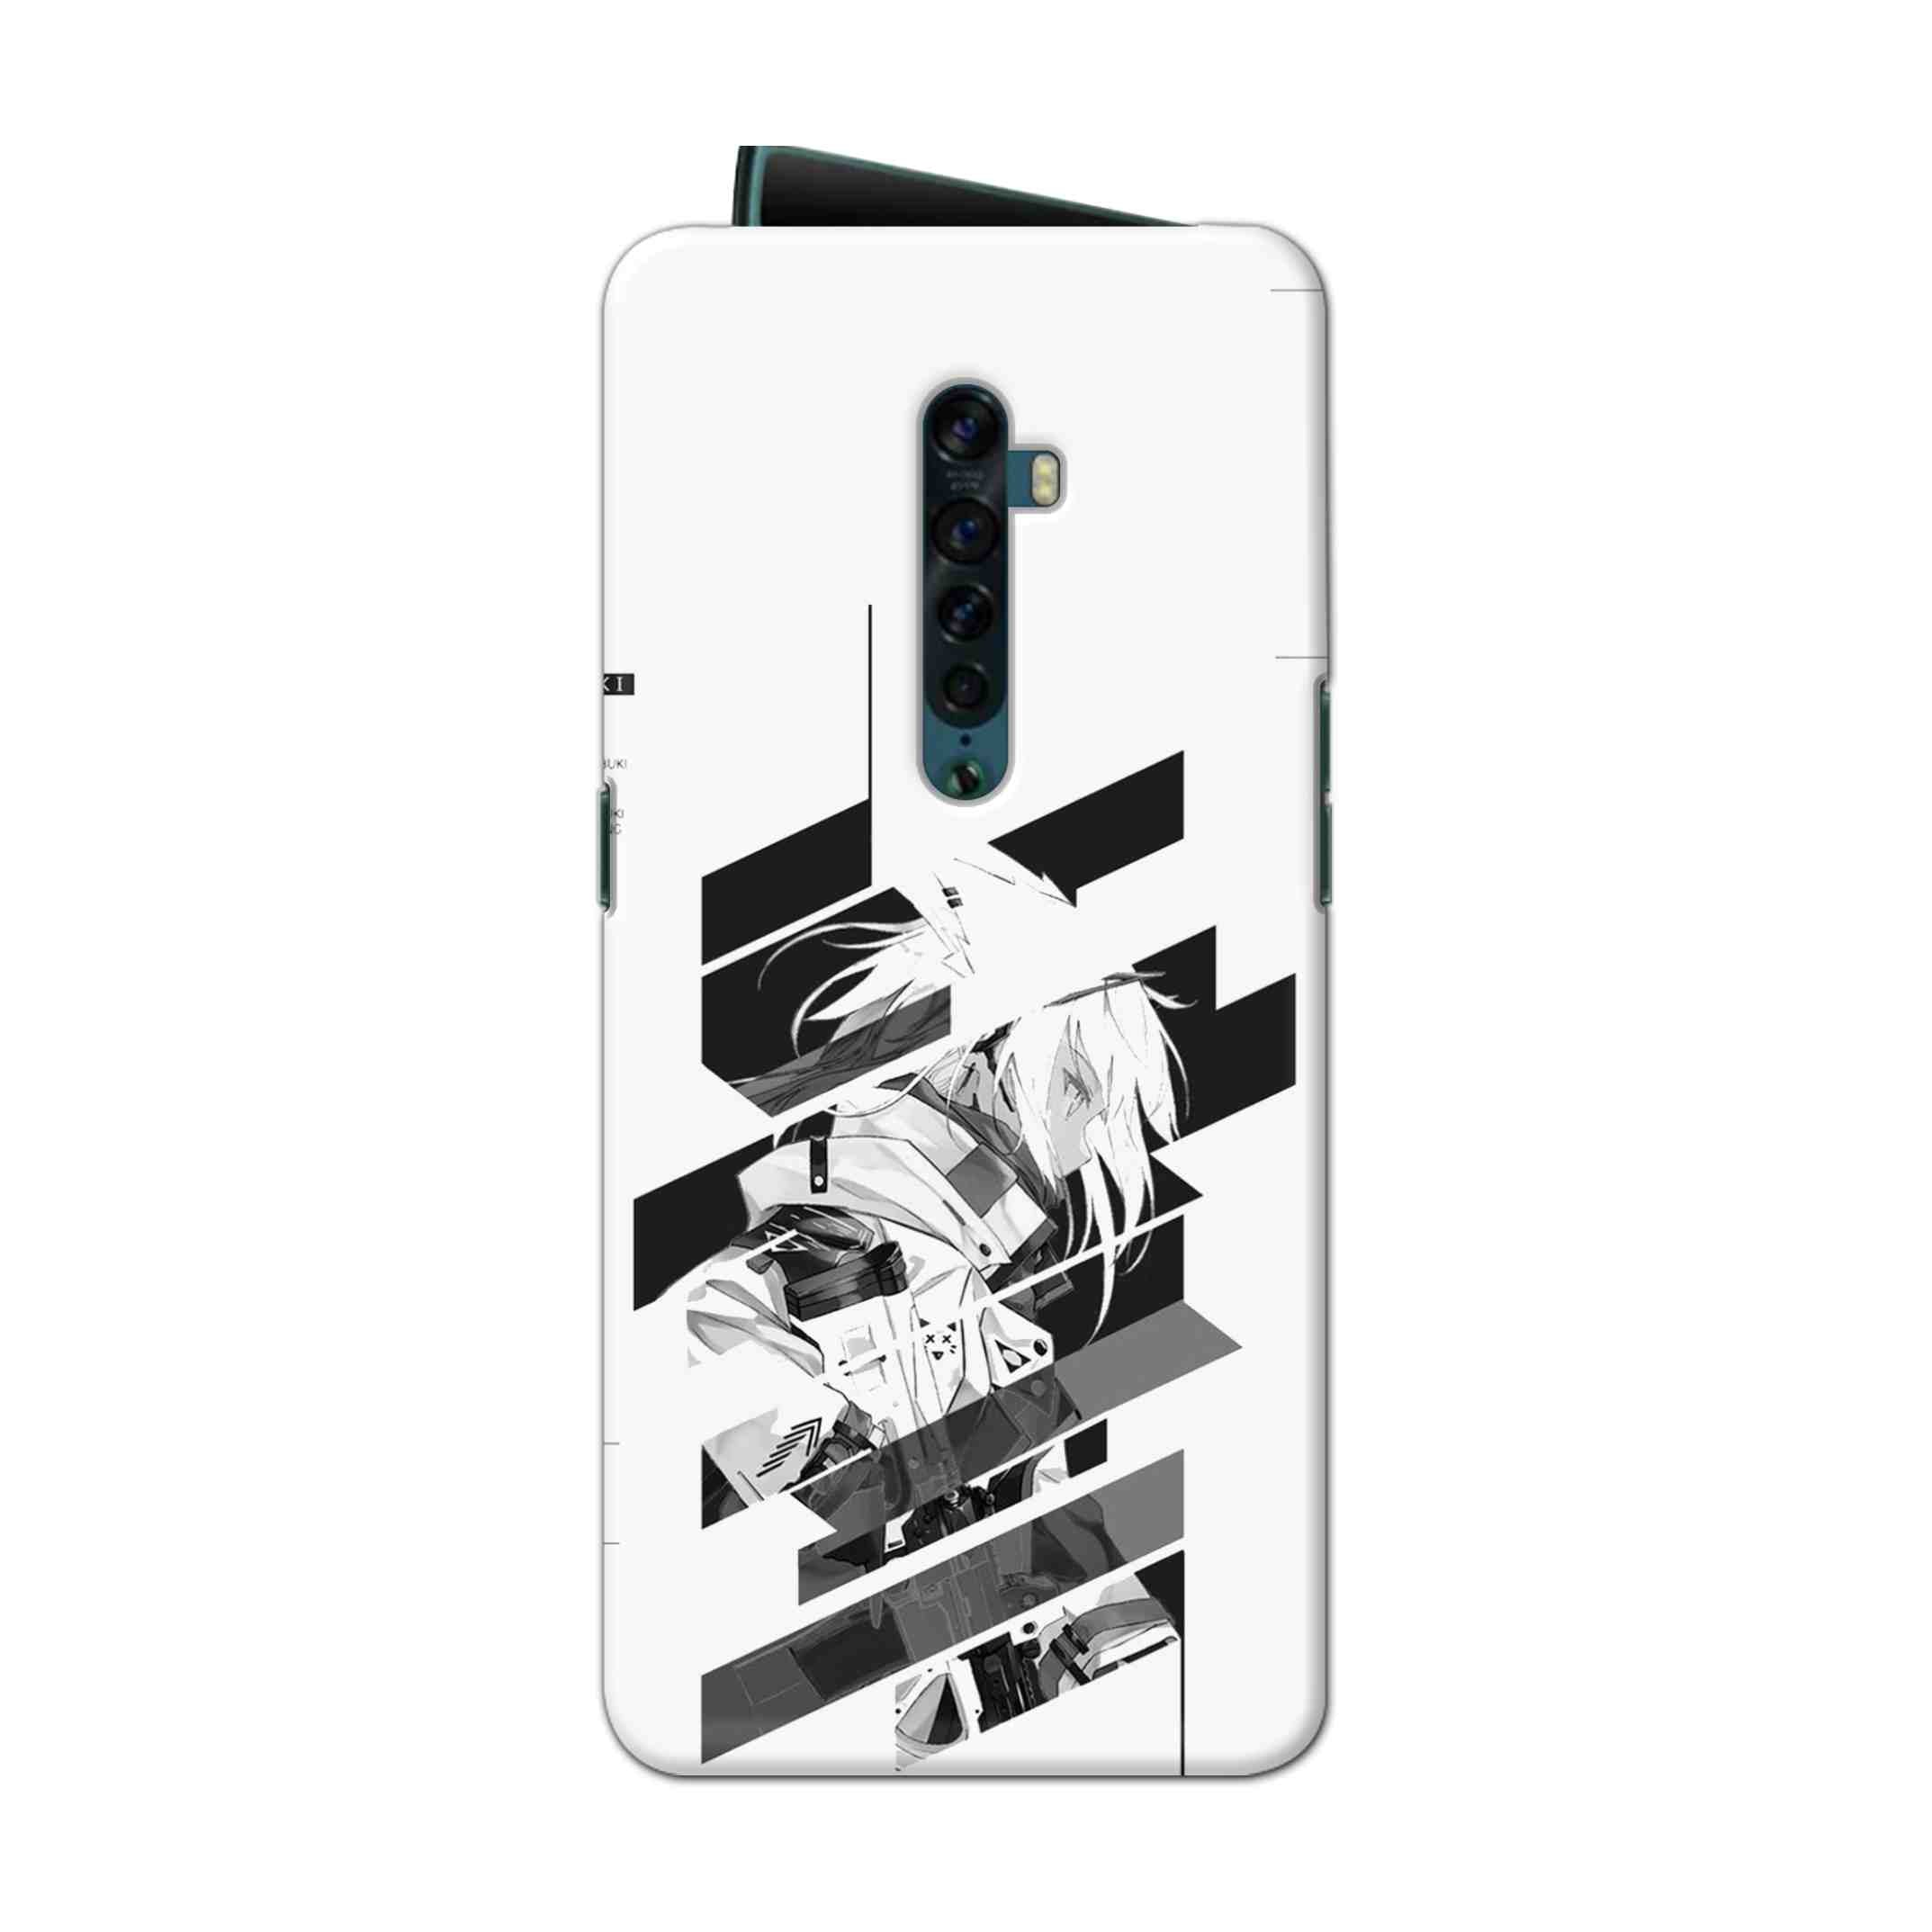 Buy Fubuki Hard Back Mobile Phone Case Cover For Oppo Reno 2 Online